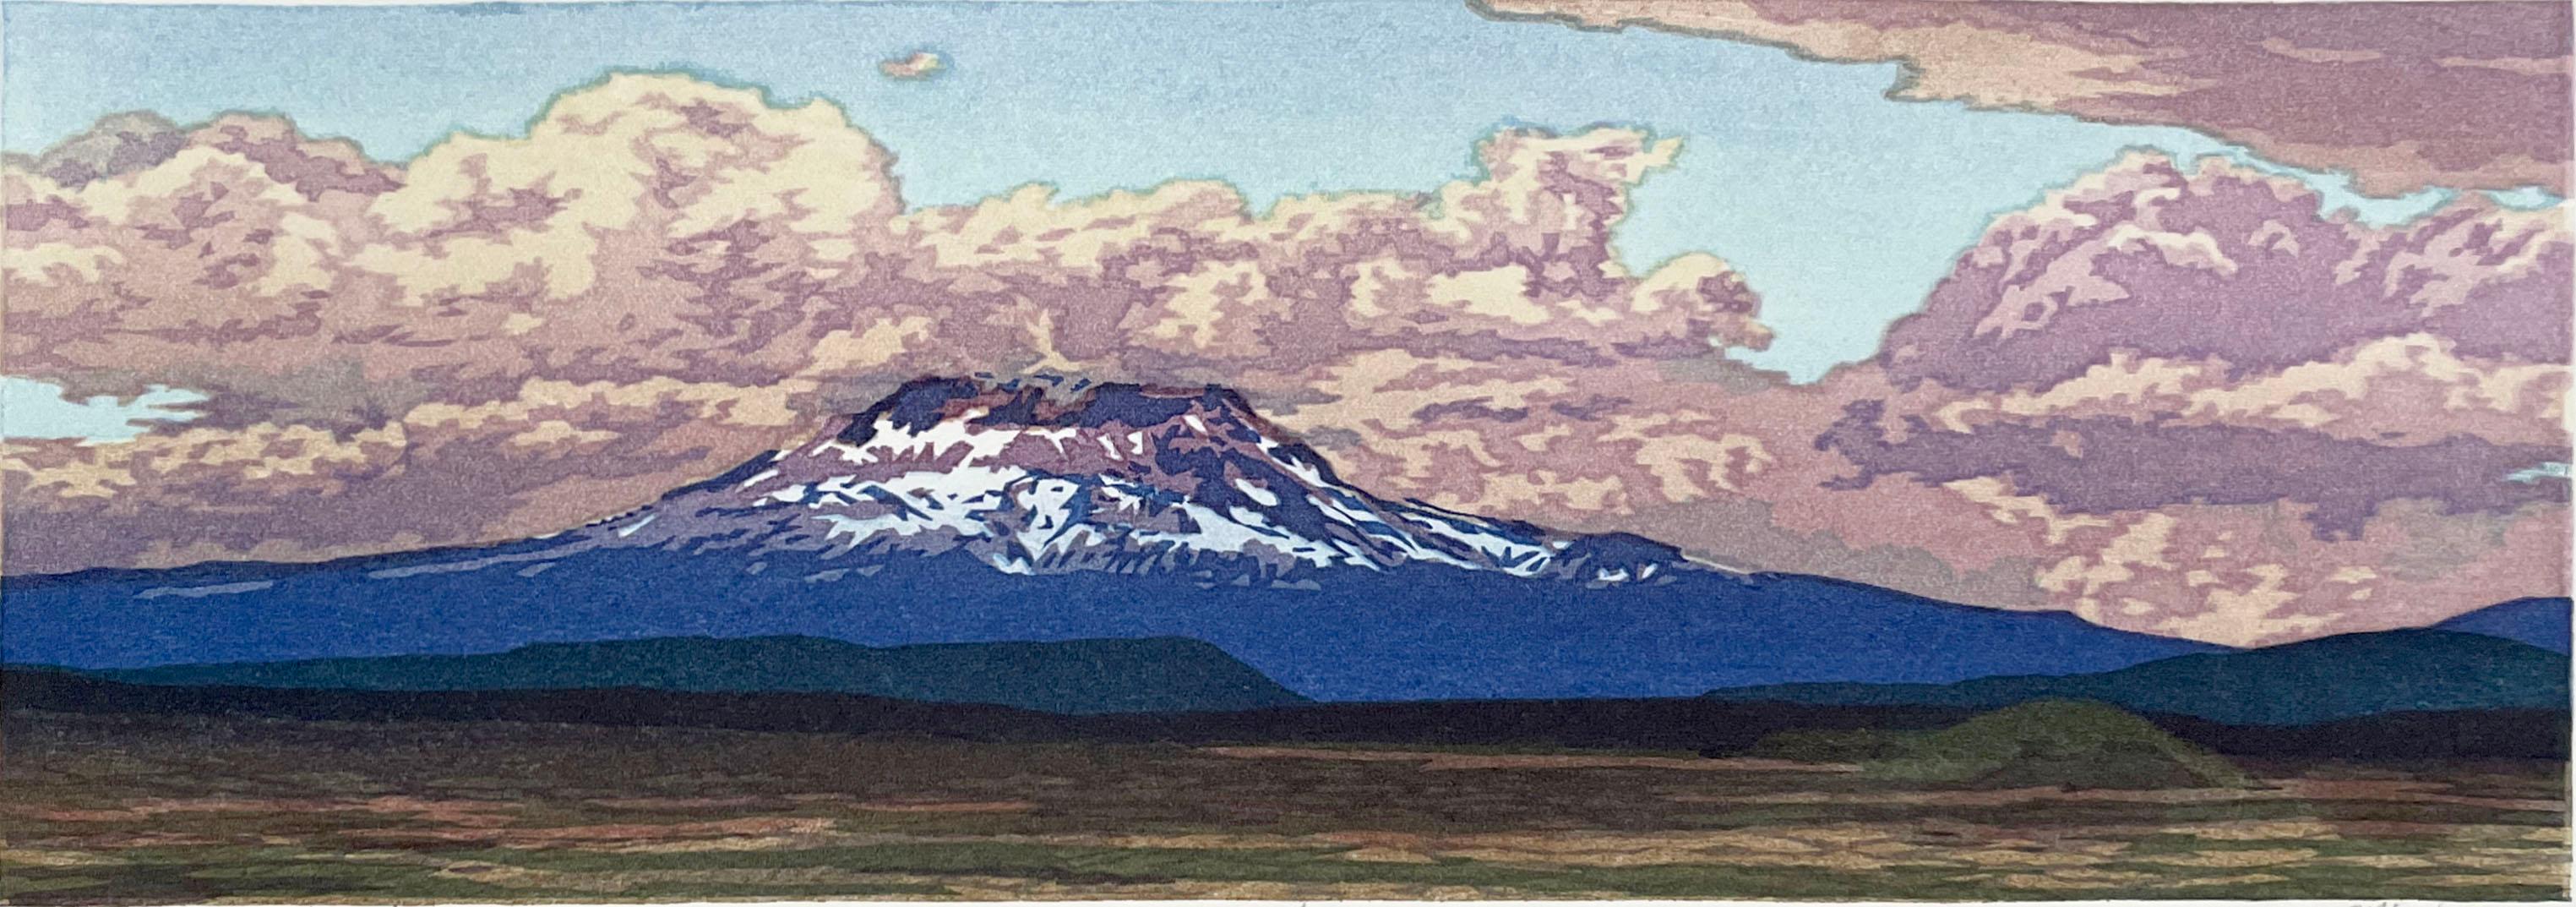 Micah Schwaberow Landscape Print - Mount Rainier, Head in the Clouds